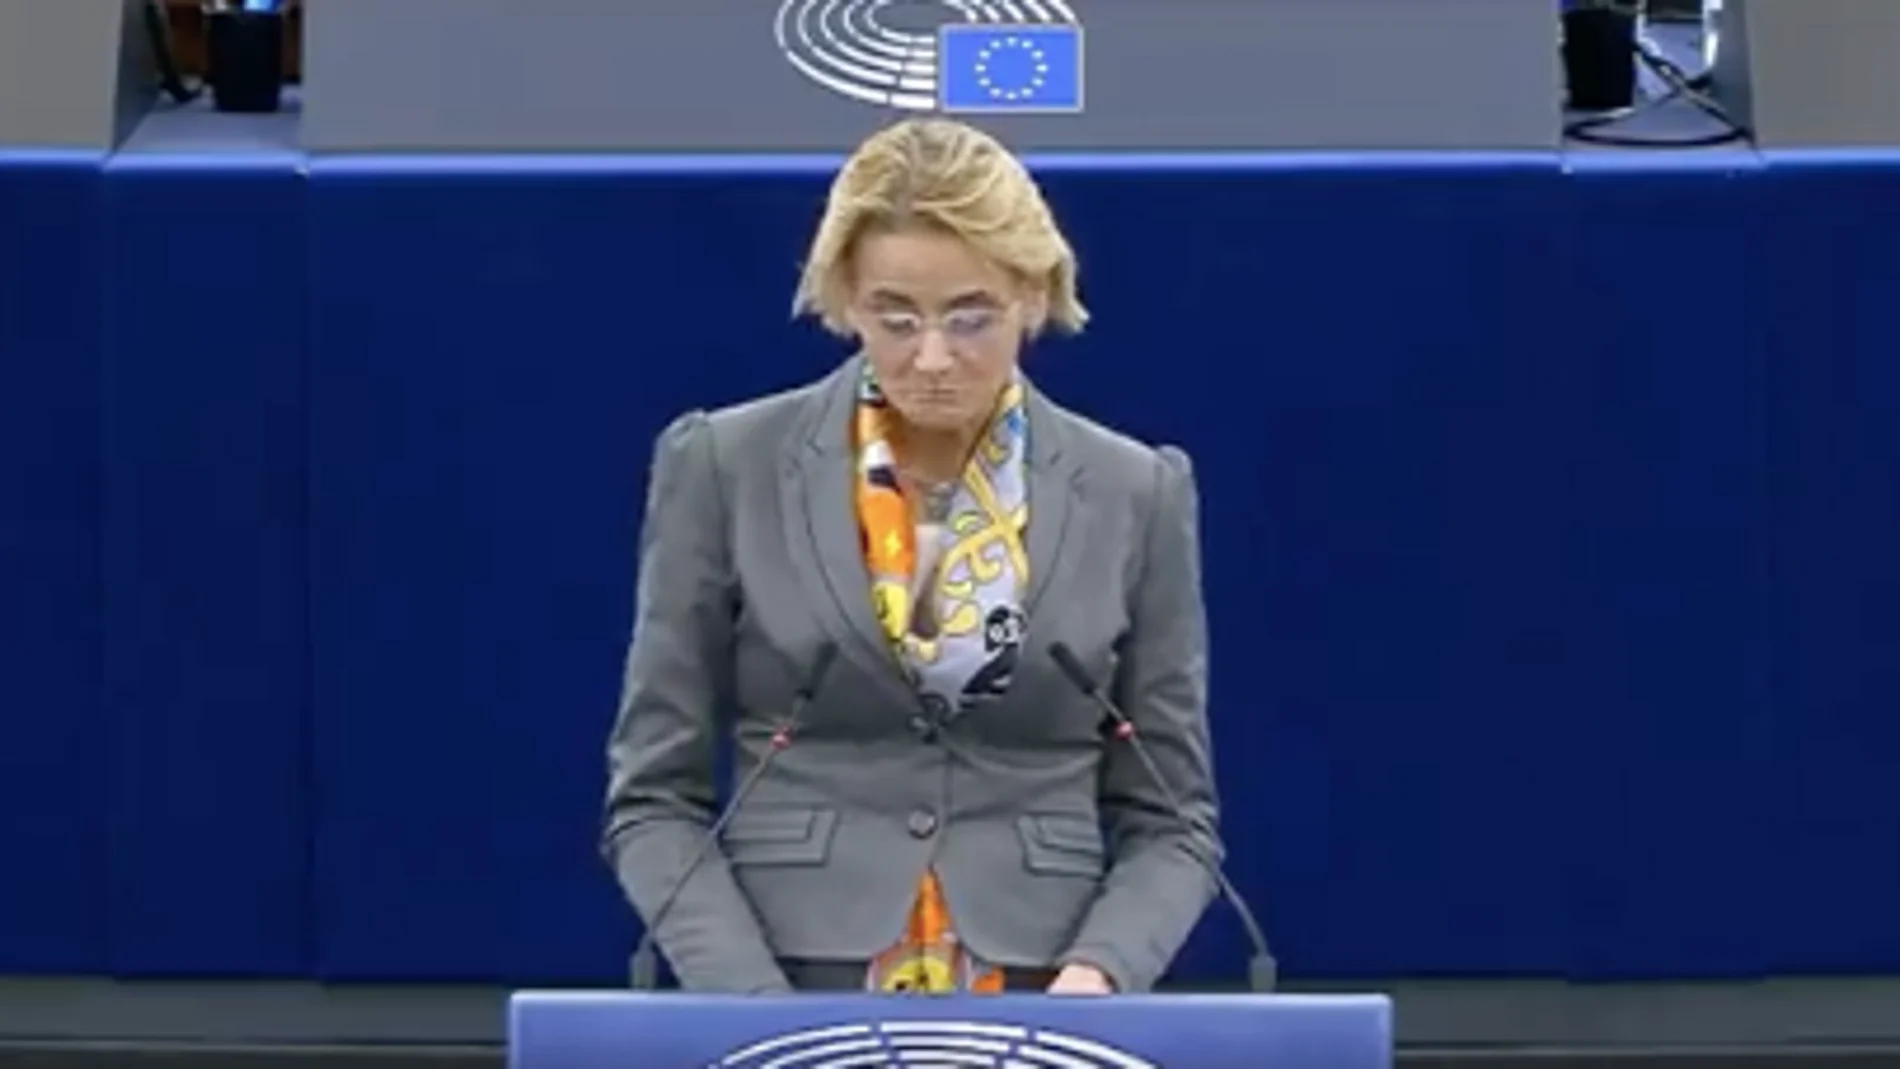 La eurodiputada húngara y exembajadora del país en España, Eniko Gyori